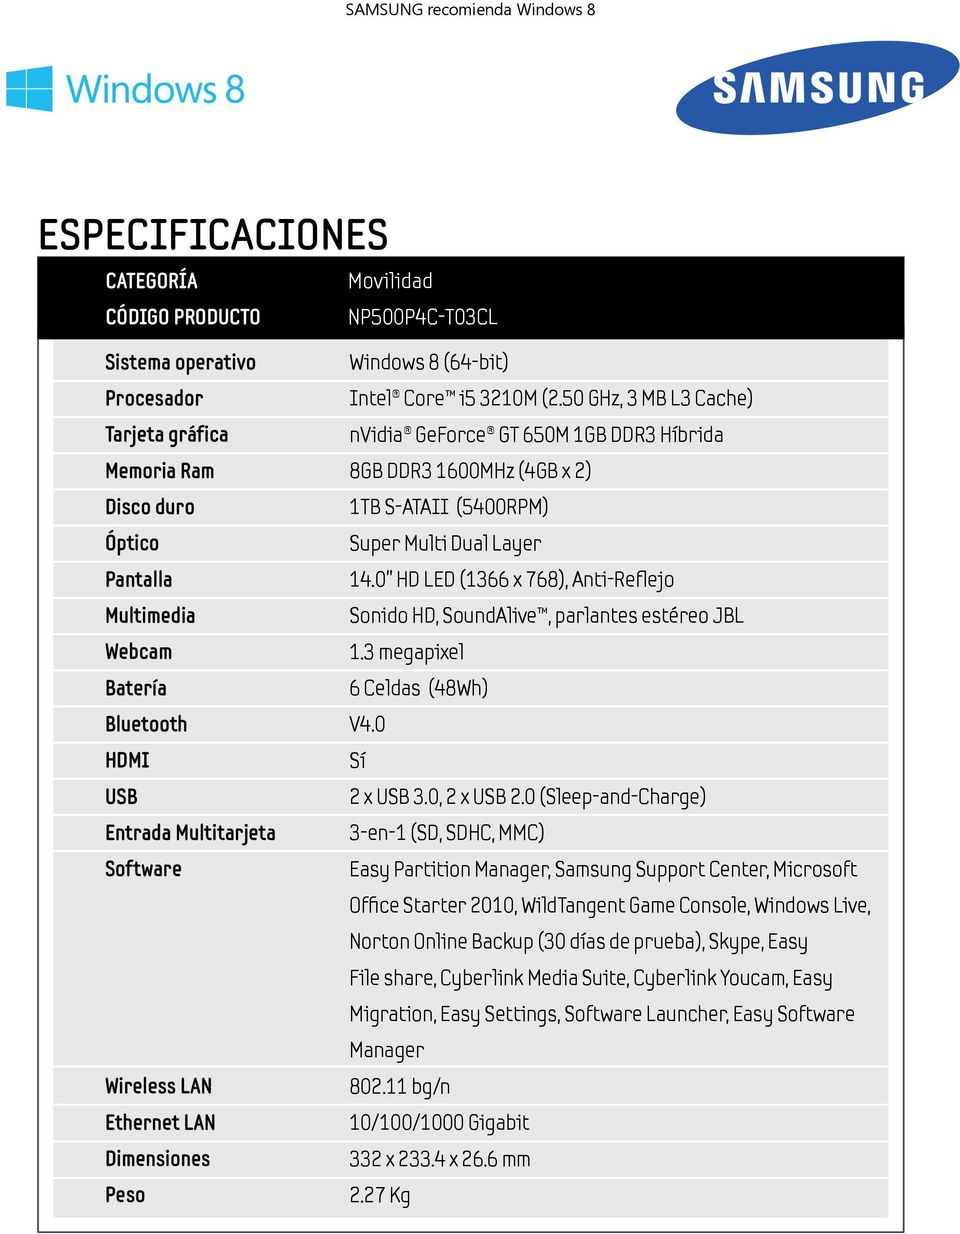 50 GHz, 3 MB L3 Cache) nvidia GeForce GT 650M 1GB DDR3 Híbrida 8GB DDR3 1600MHz (4GB x 2) 1TB S-ATAII (5400RPM) Super Multi Dual Layer 14.